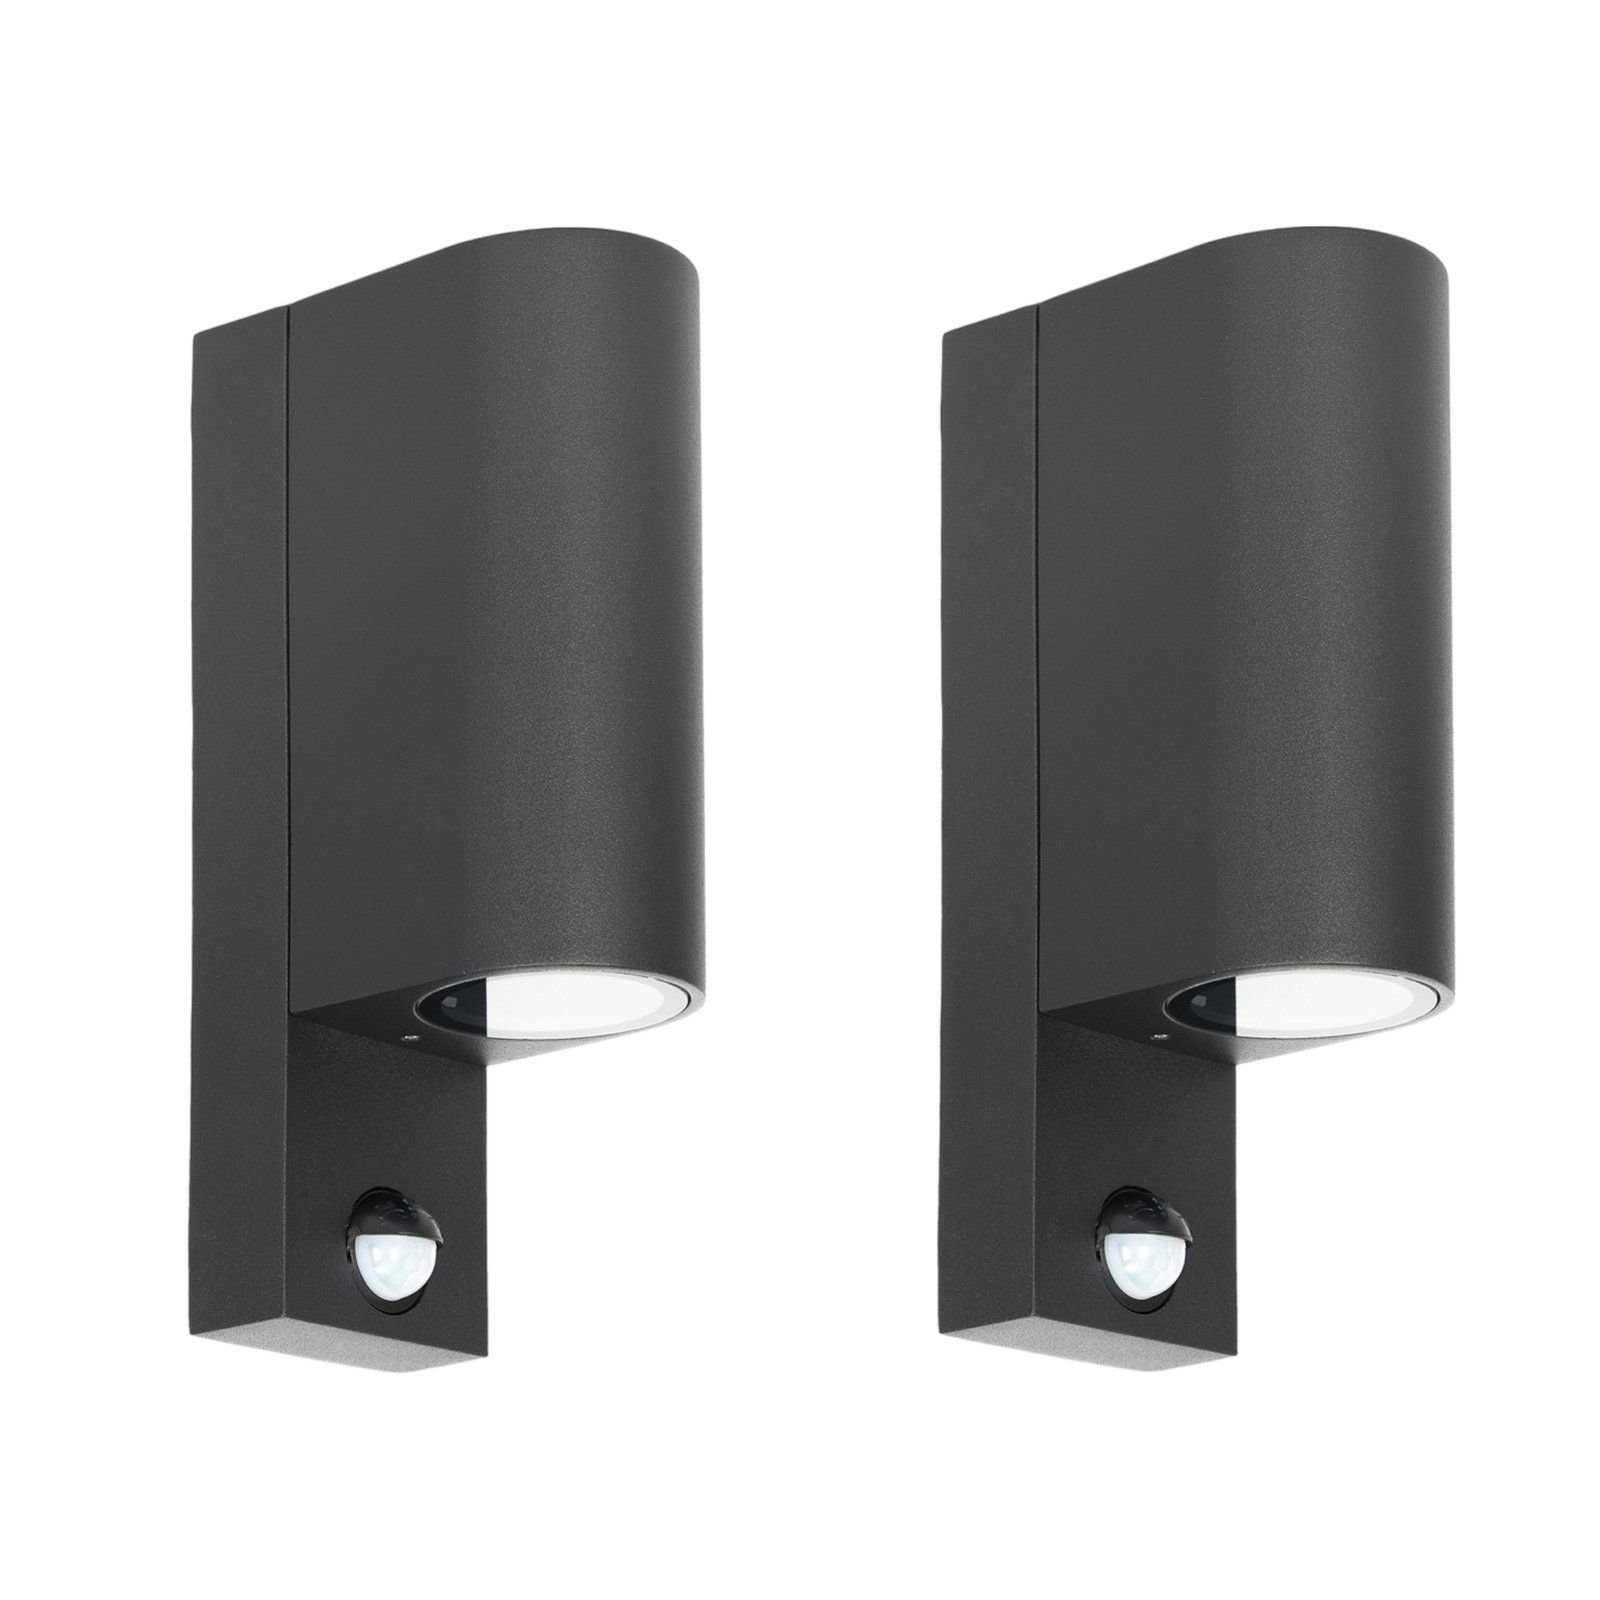 Prios outdoor wall light Tetje, black, round, sensor, set of 2